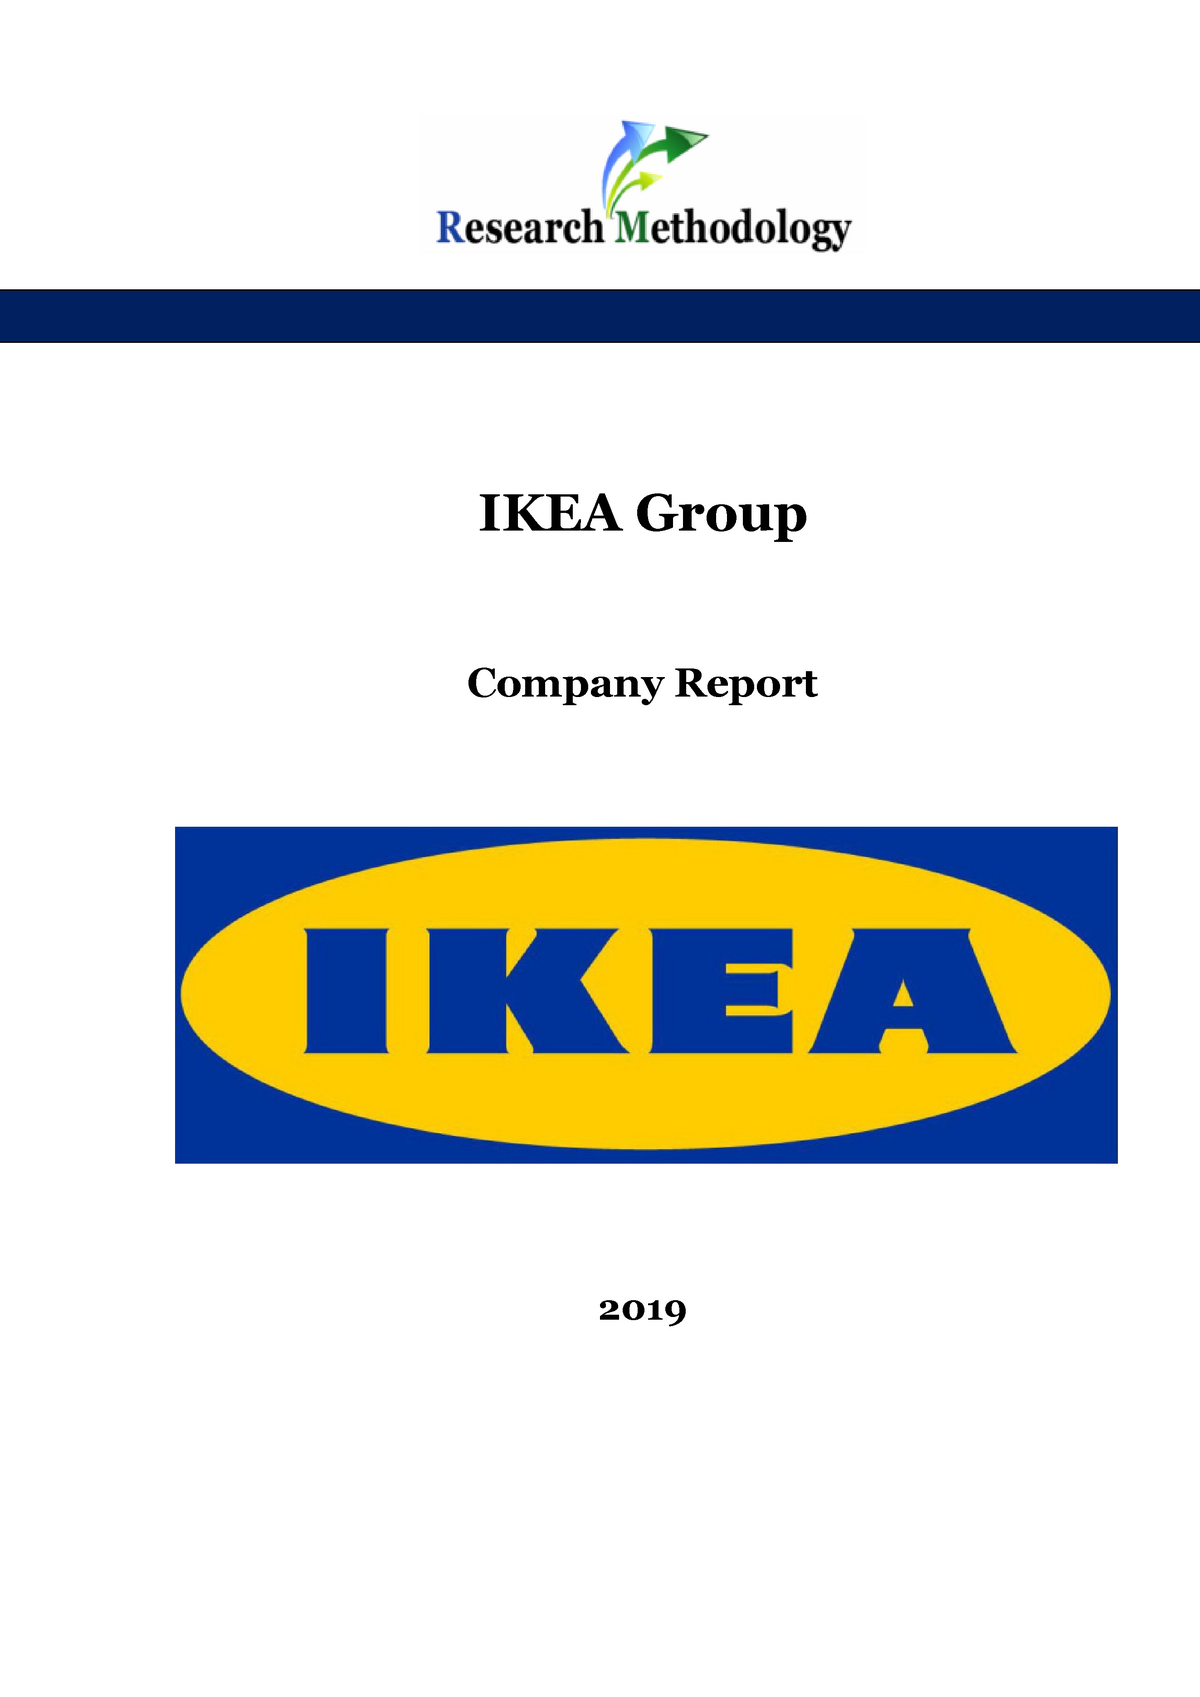 Inter IKEA Group